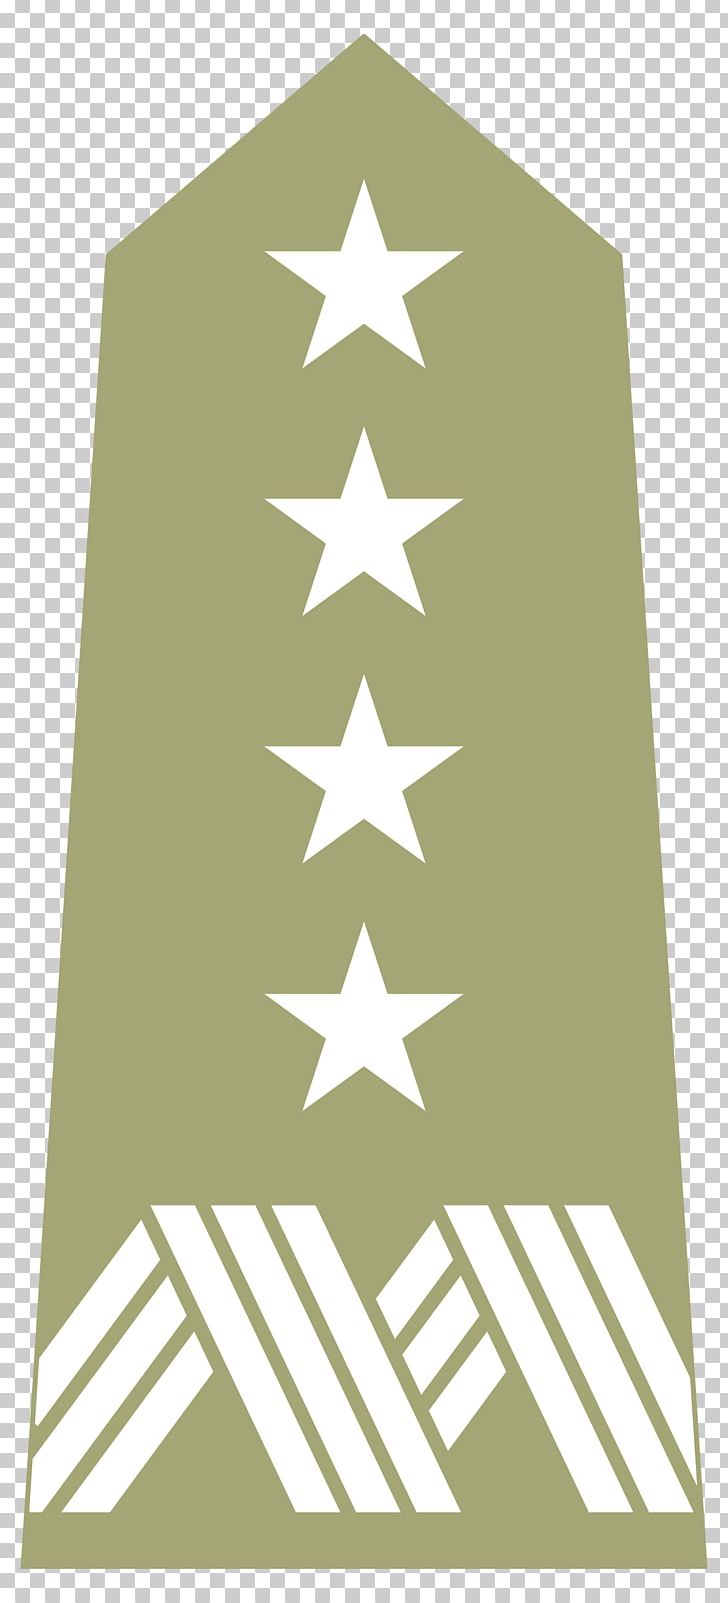 Generał Broni Brigadier General Four-star Rank Military Rank PNG, Clipart, Angle, Brigade, Brigadier General, Fourstar Rank, General Free PNG Download